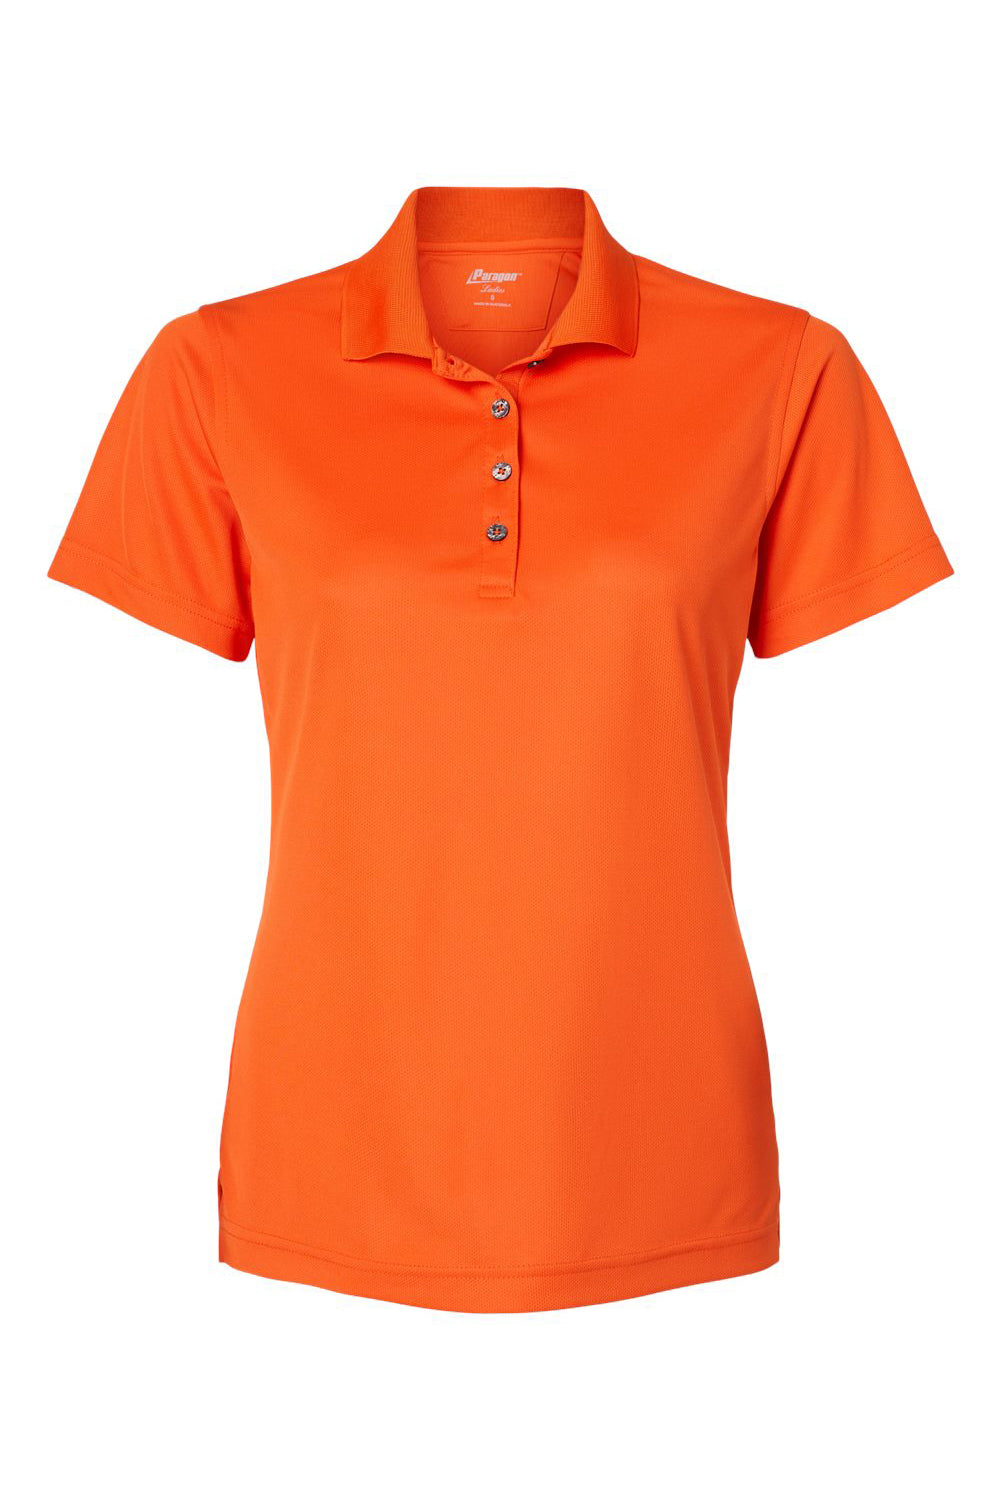 Paragon 104 Womens Saratoga Performance Mini Mesh Short Sleeve Polo Shirt Orange Flat Front